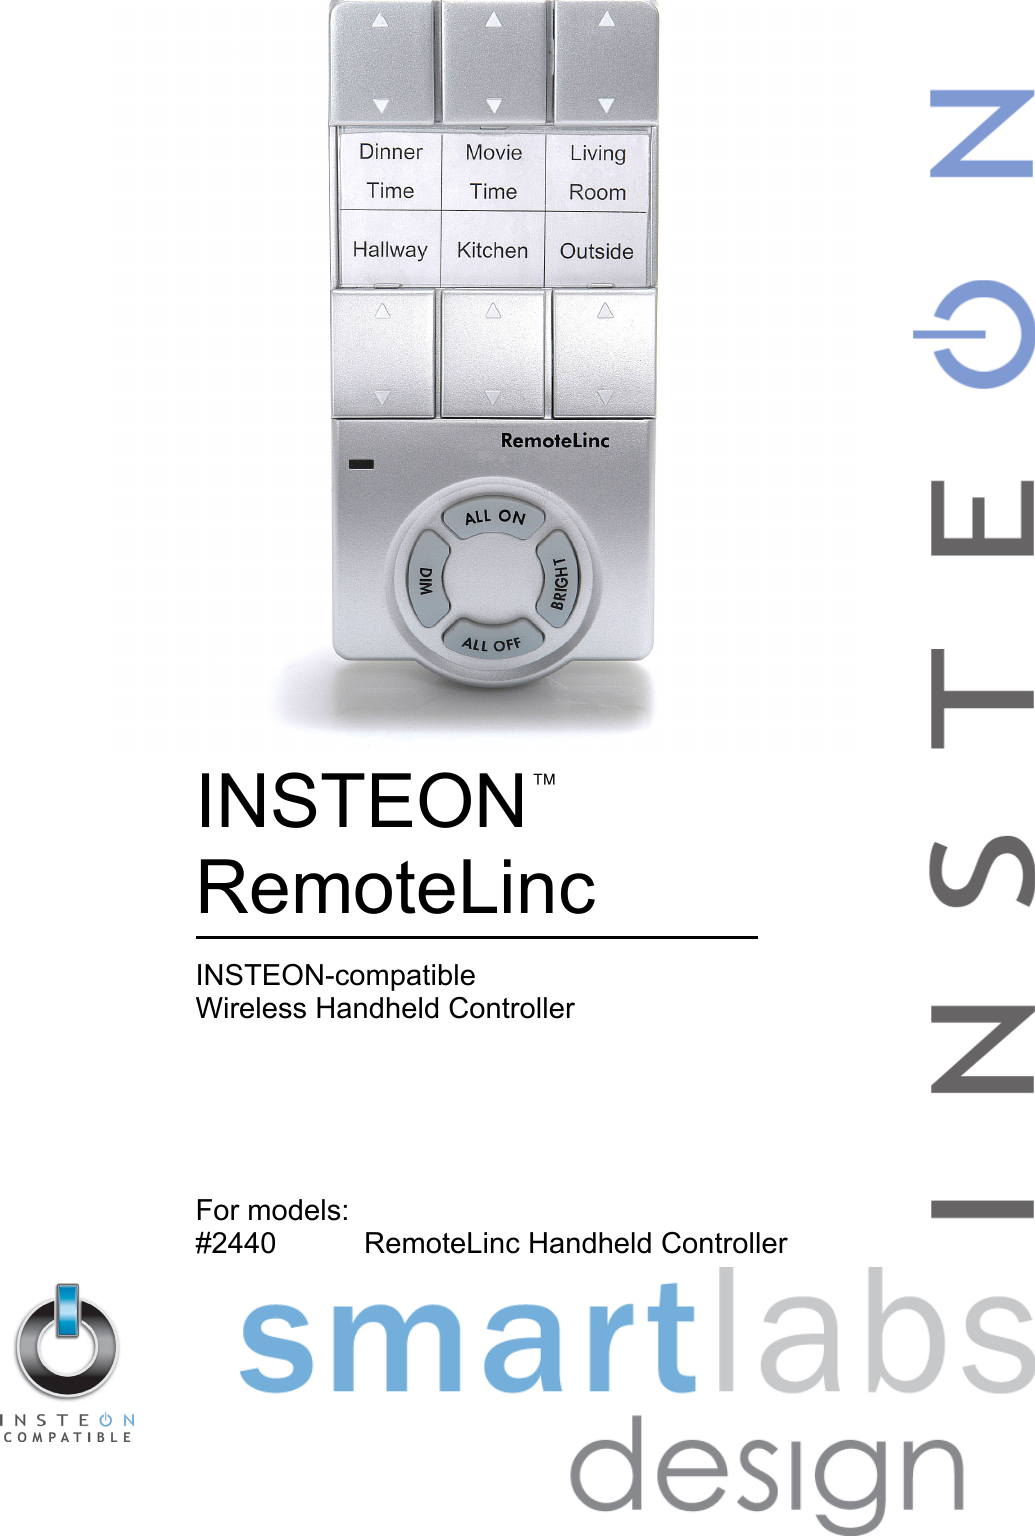         INSTEON RemoteLinc  INSTEON-compatible Wireless Handheld Controller      For models: #2440  RemoteLinc Handheld Controller ™